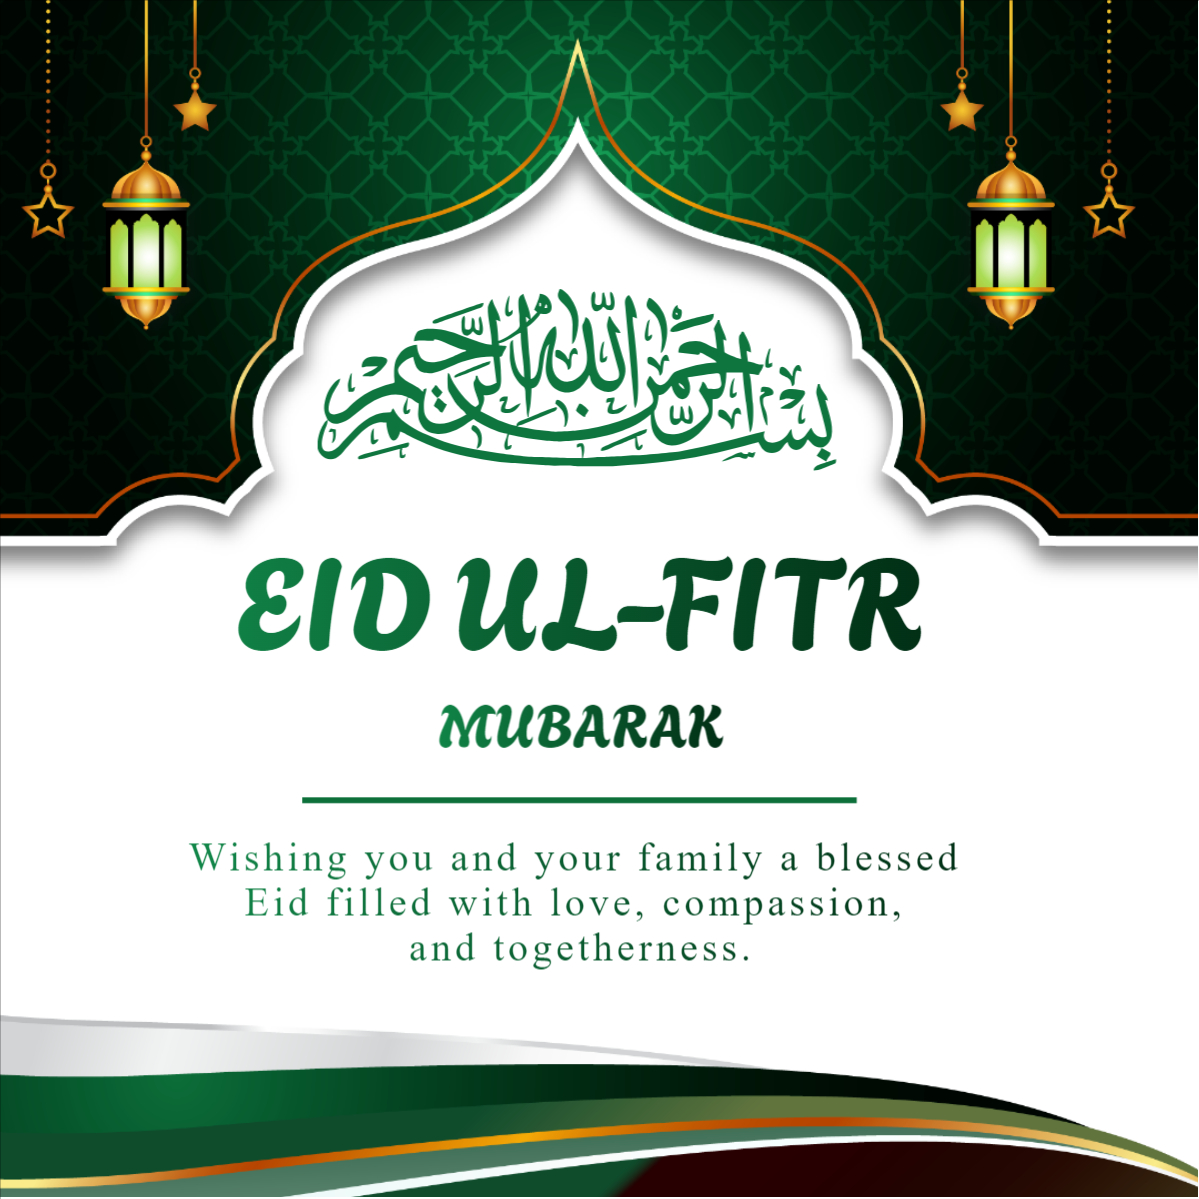 Happy Eid Al Fit Mubarak template design download for free